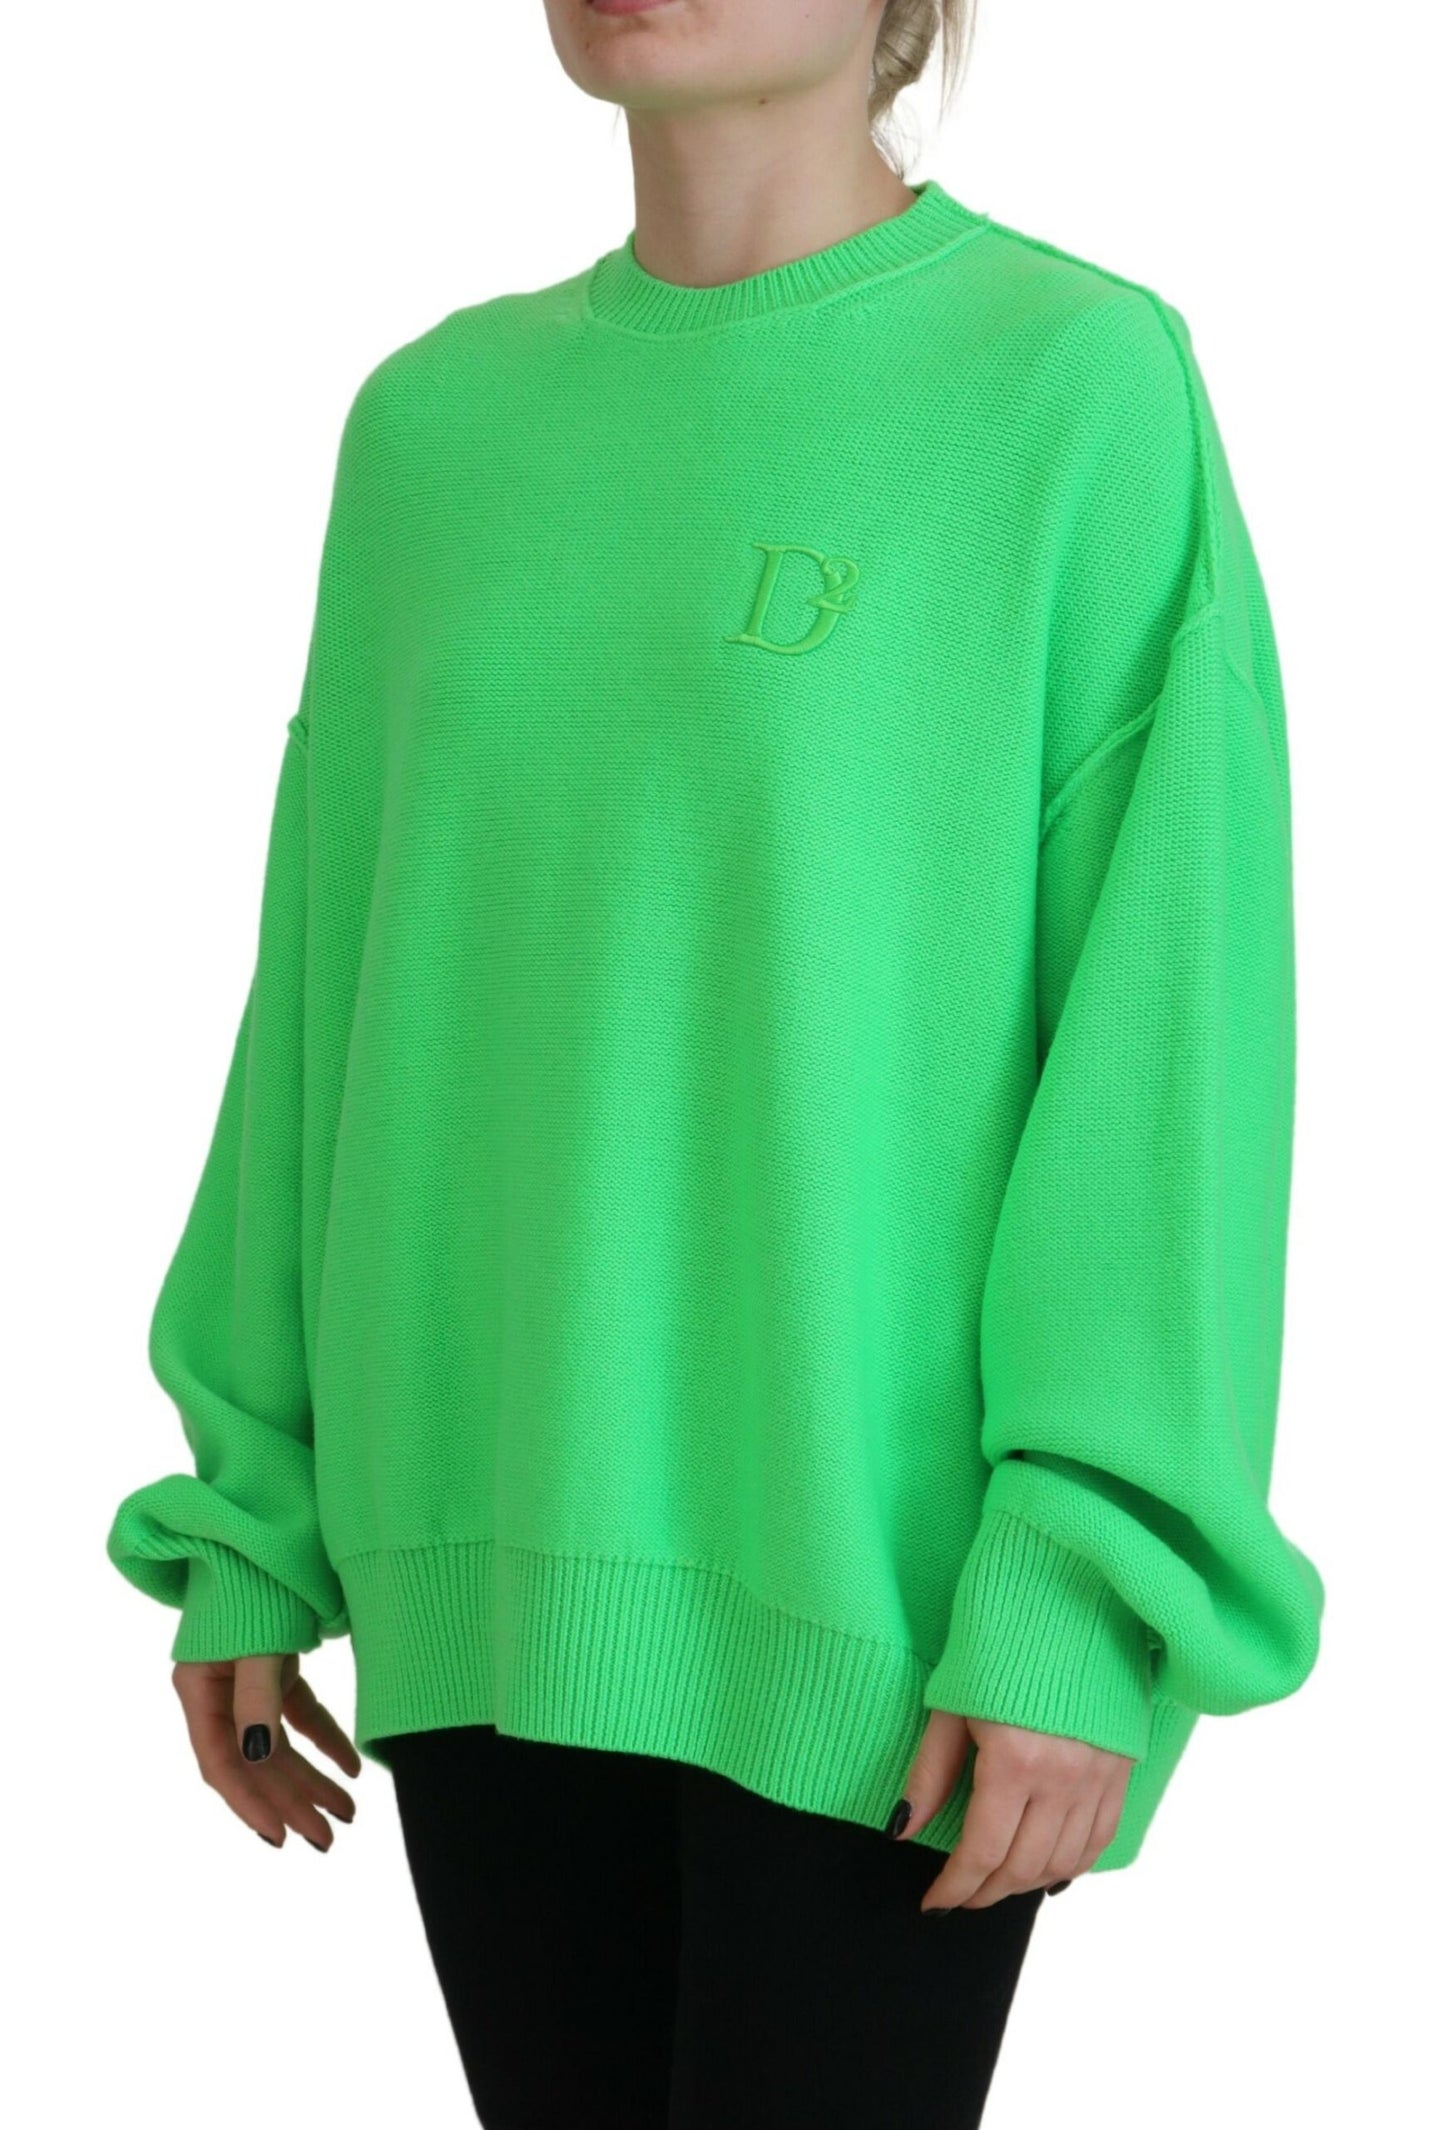 Green Logo Embroidery Women Long Sleeve Sweater